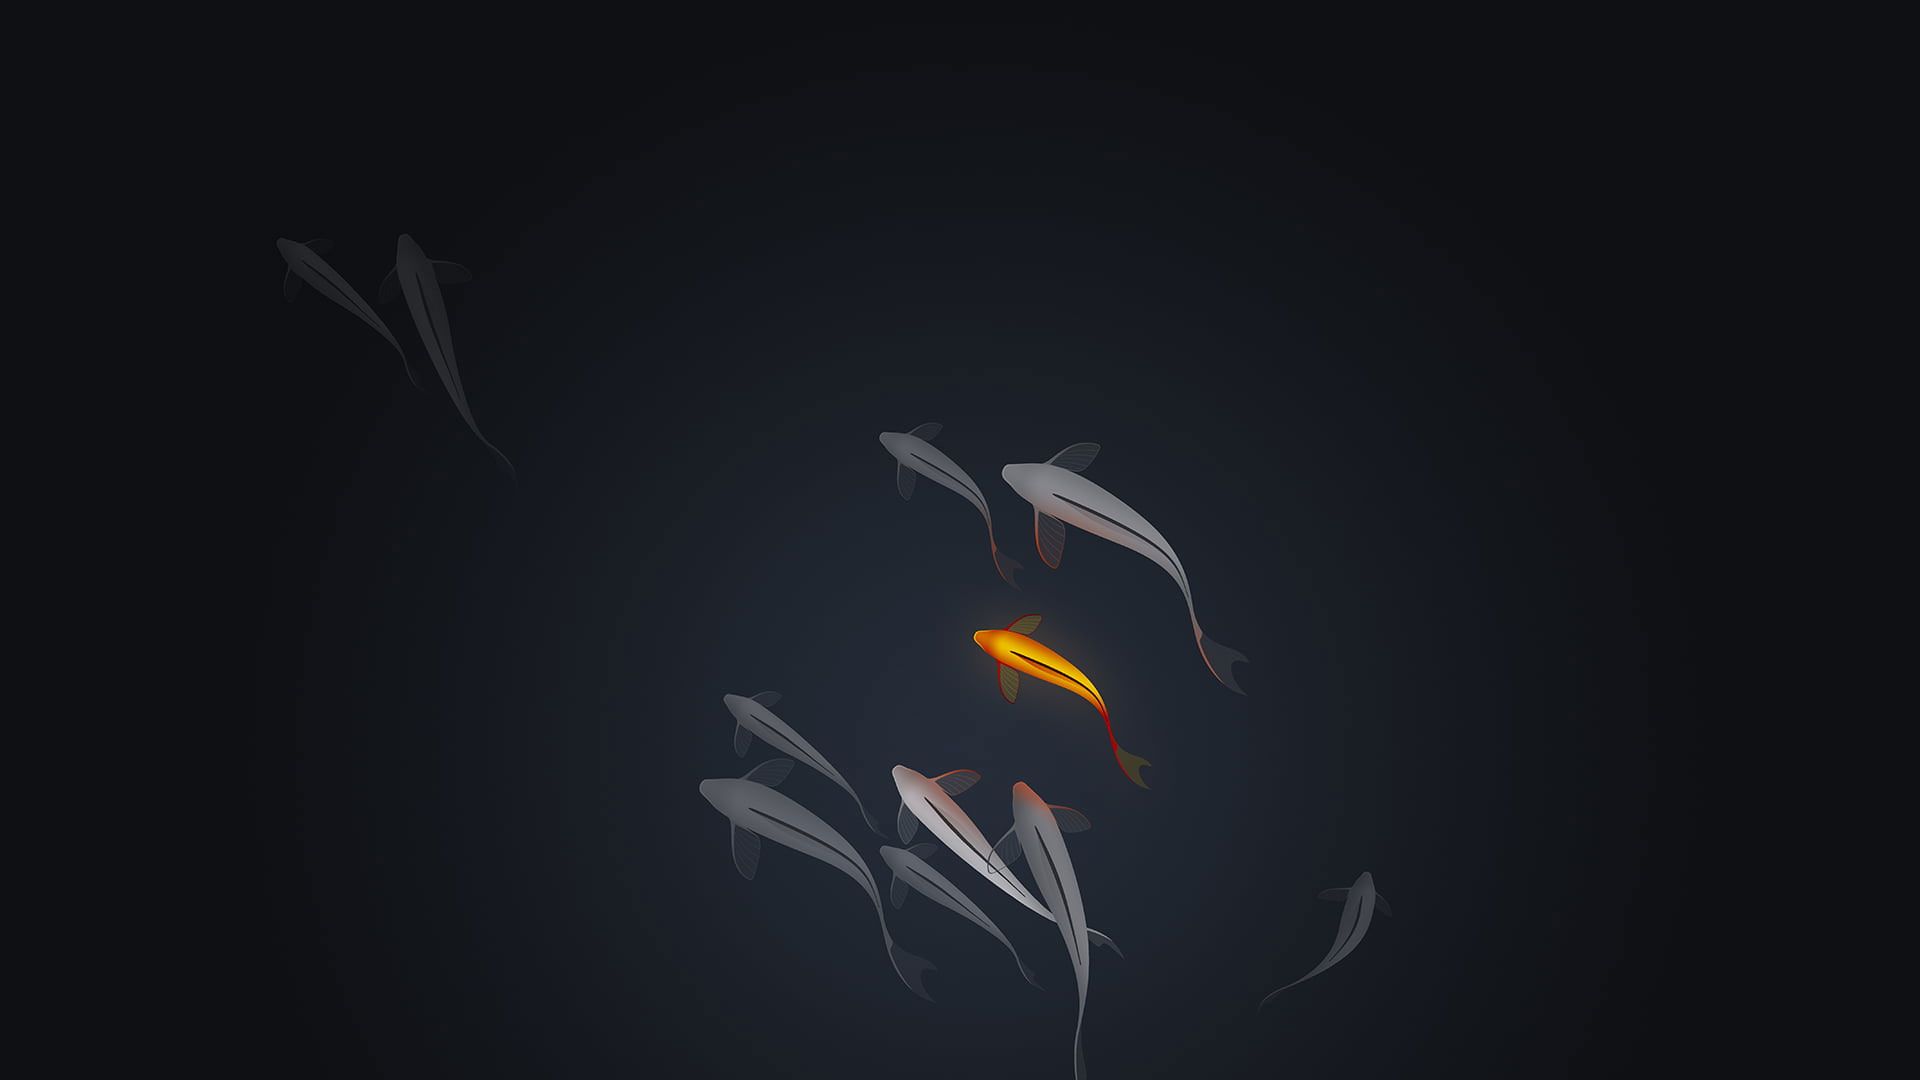 A fish swimming in the dark water - Koi fish